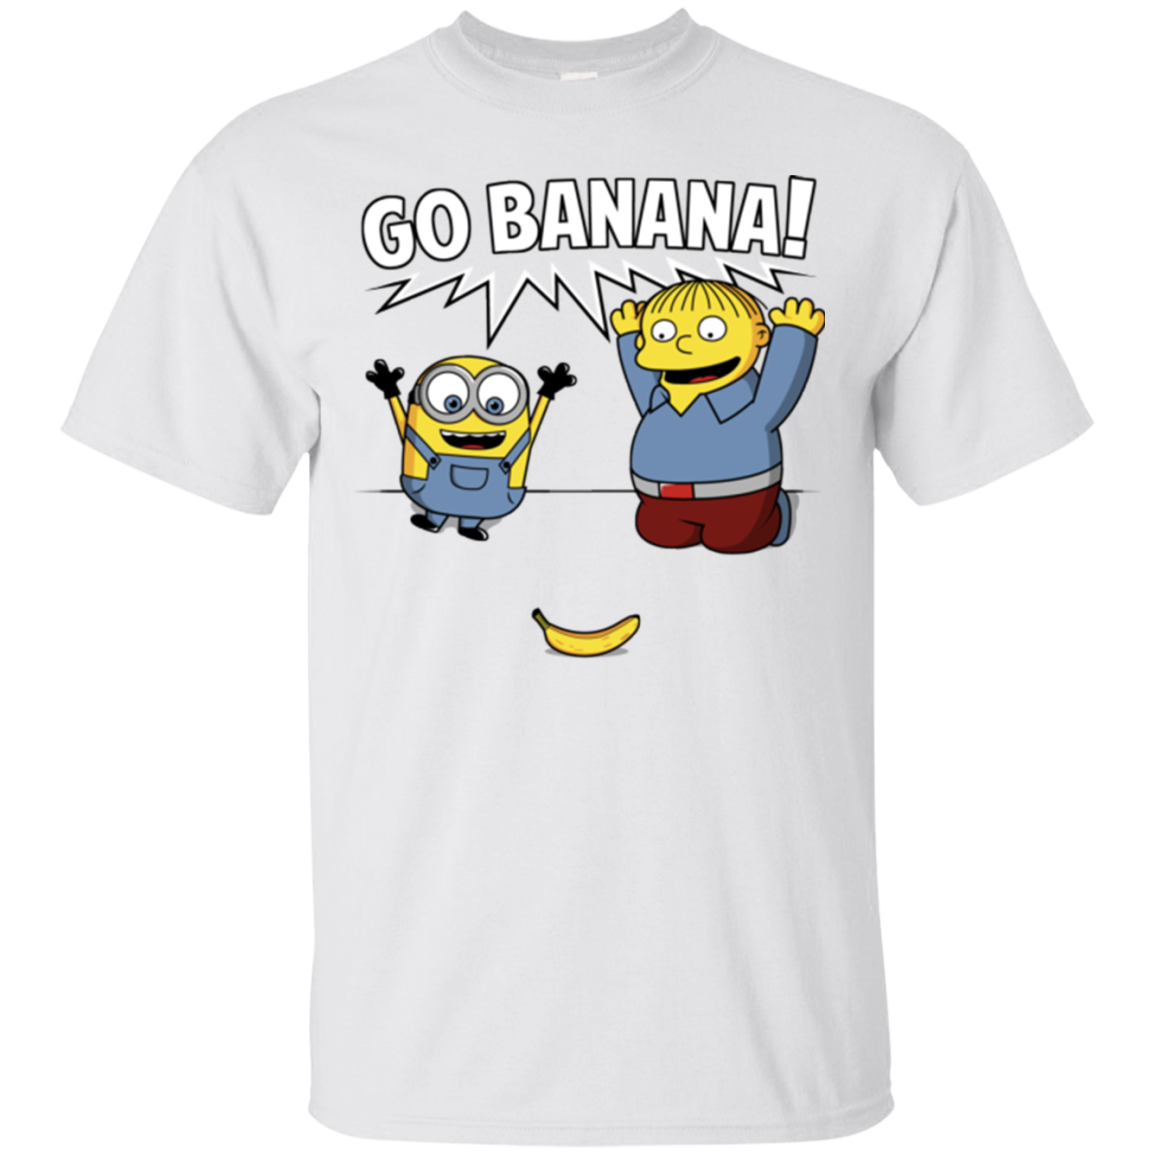 Go Banana! T-Shirt